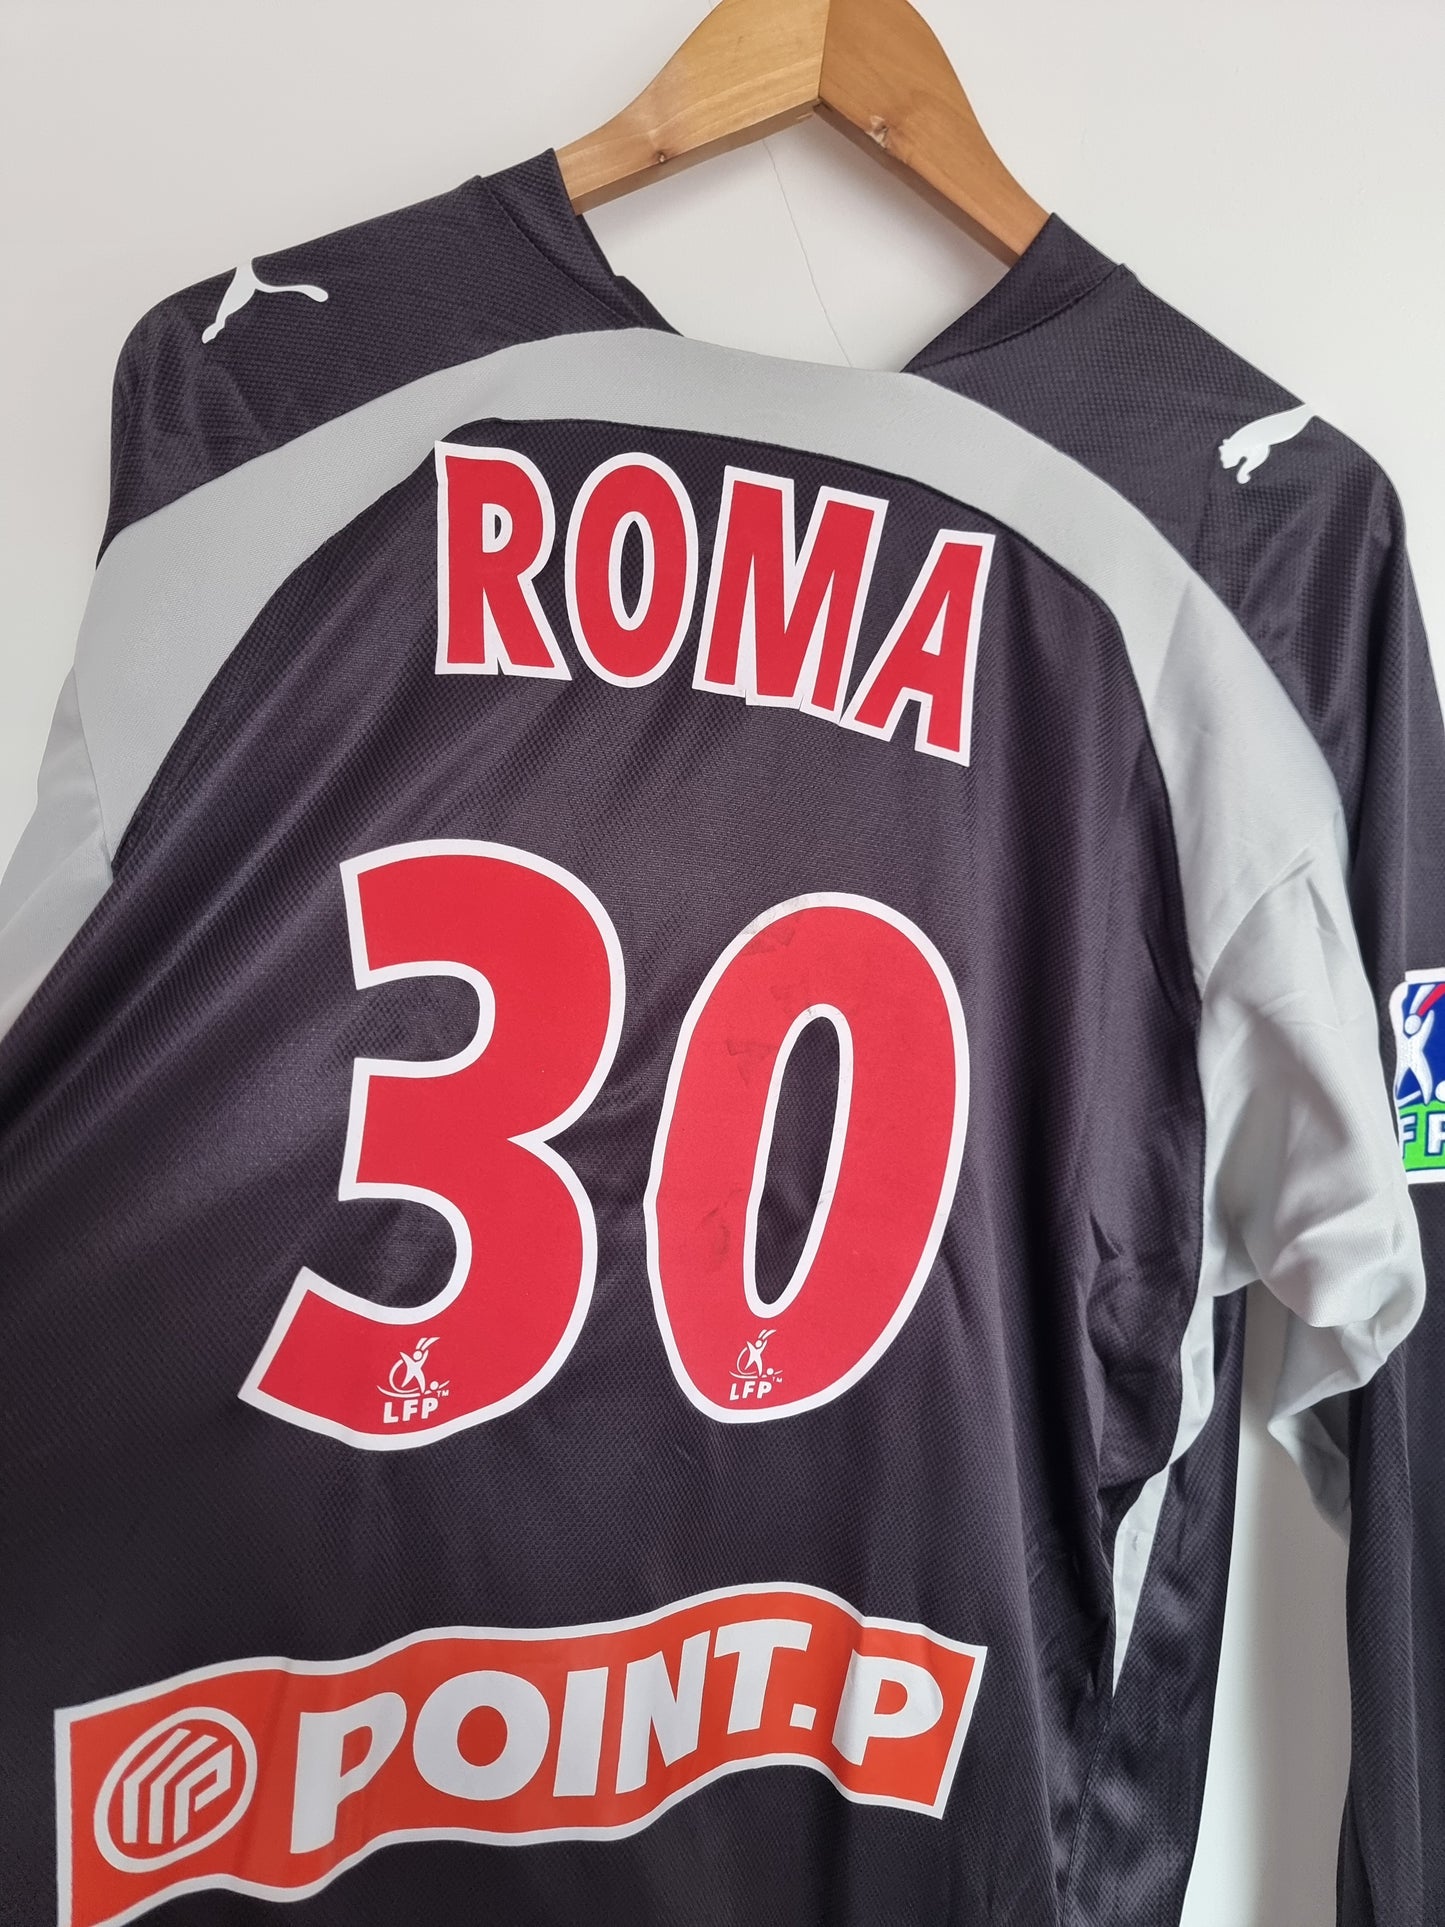 Puma A.S Monaco 06/07 'Roma 30' Long Sleeve Coupe De La Ligue Match Issue Goalkeeper Shirt XXL